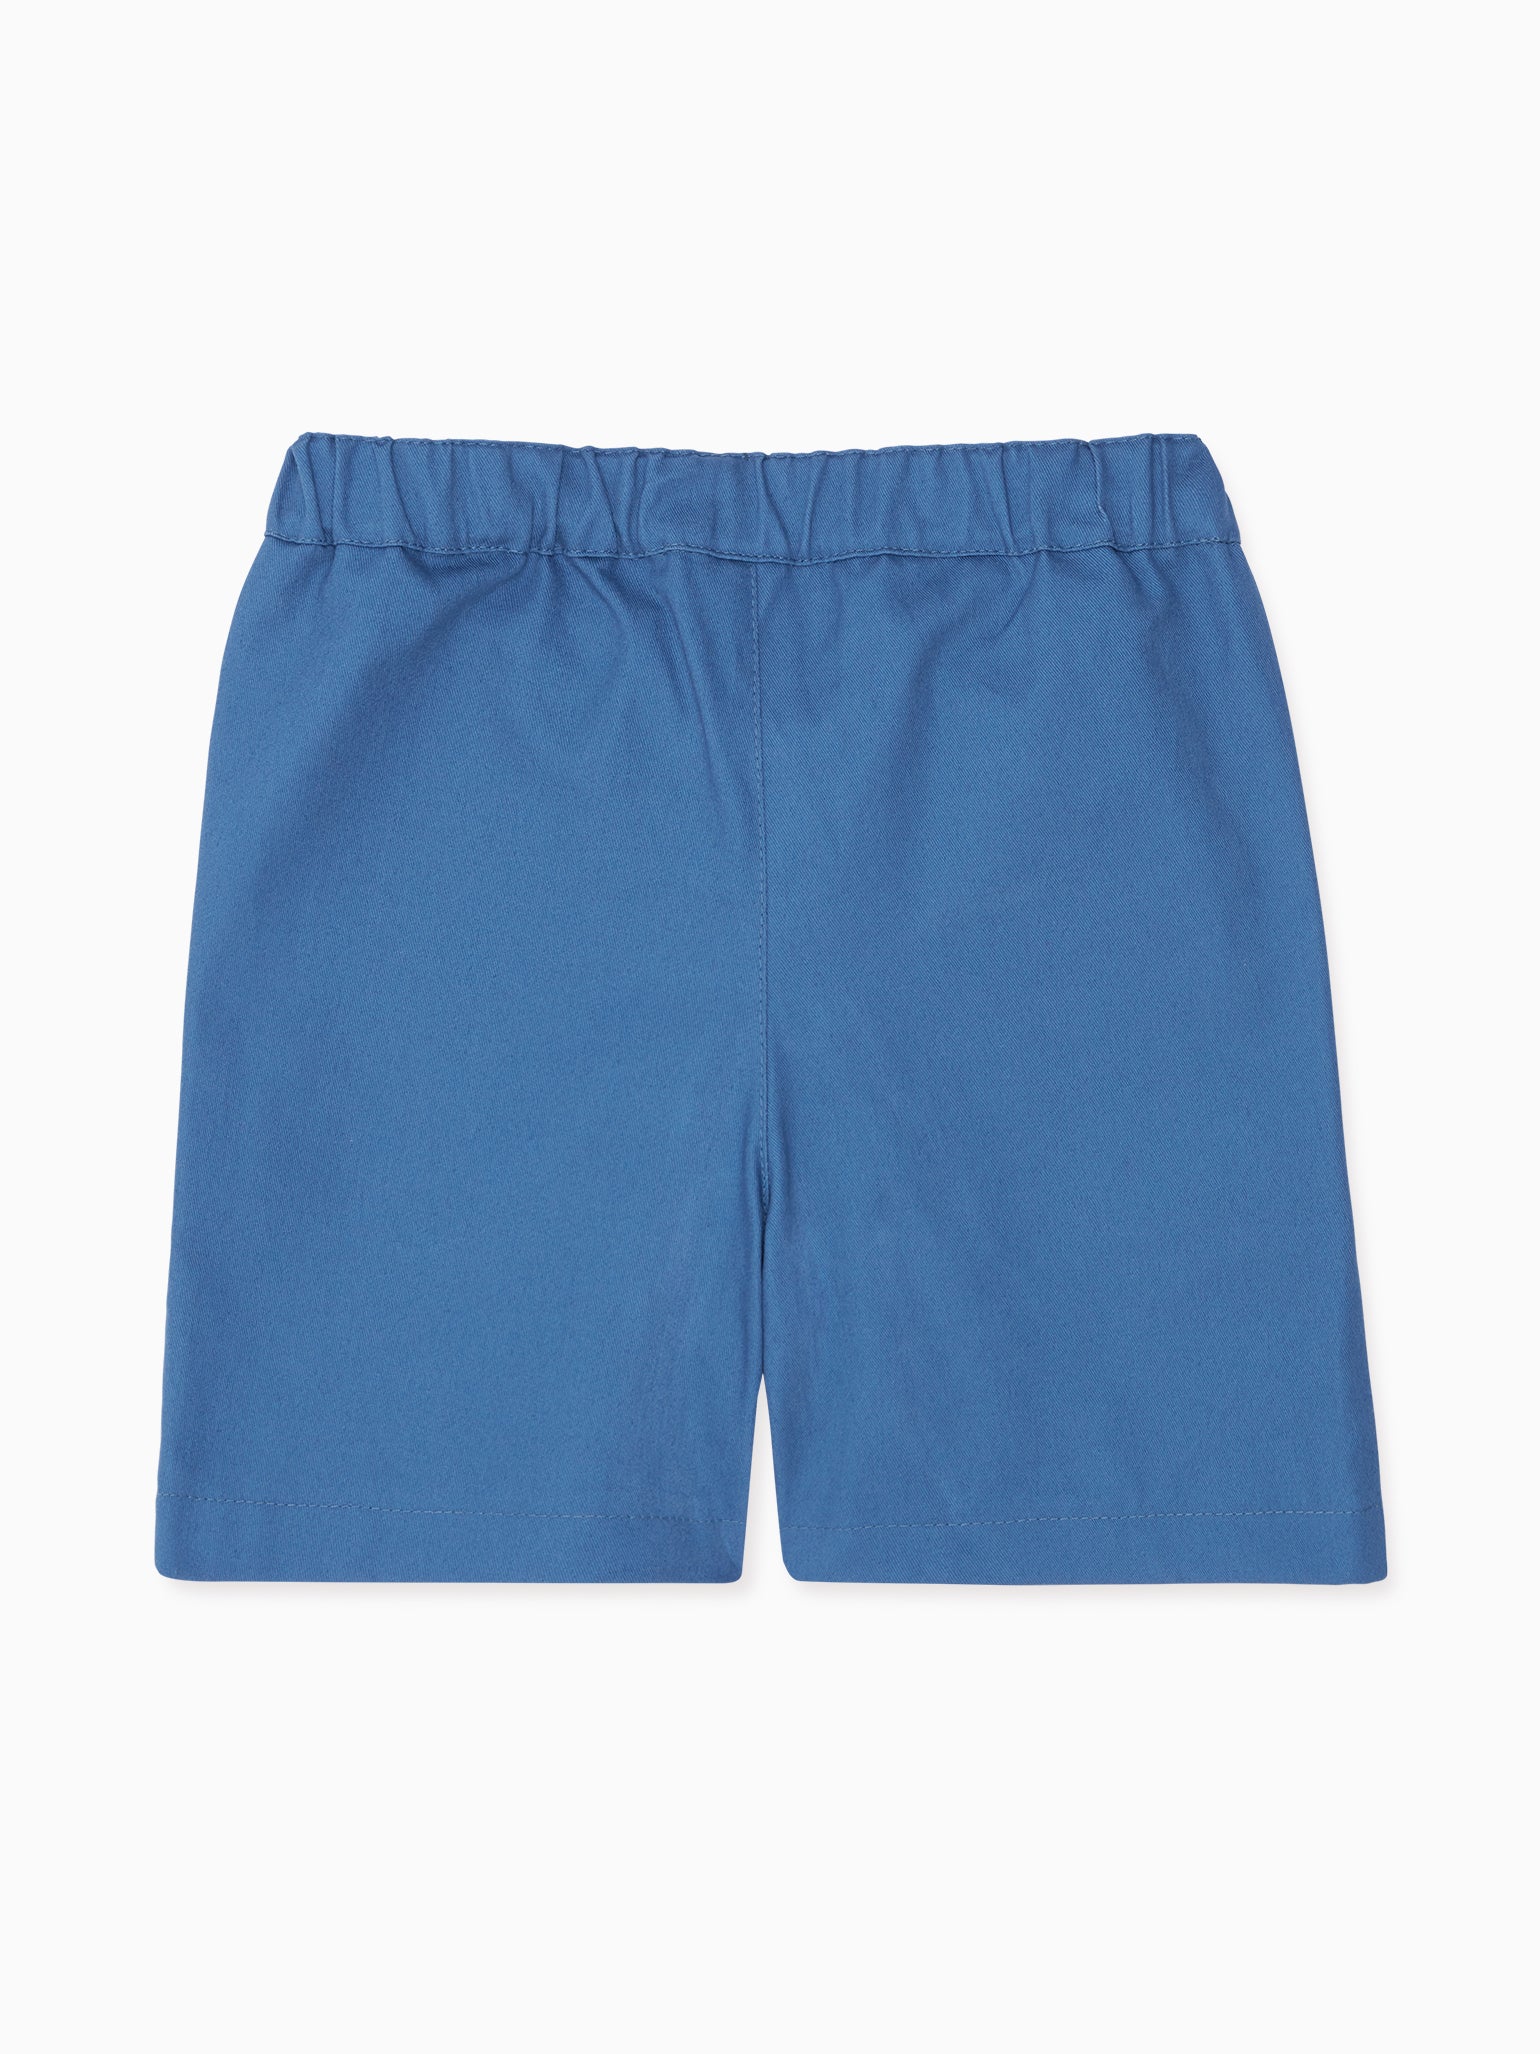 Capri Blue Cortino Boy Cotton Shorts